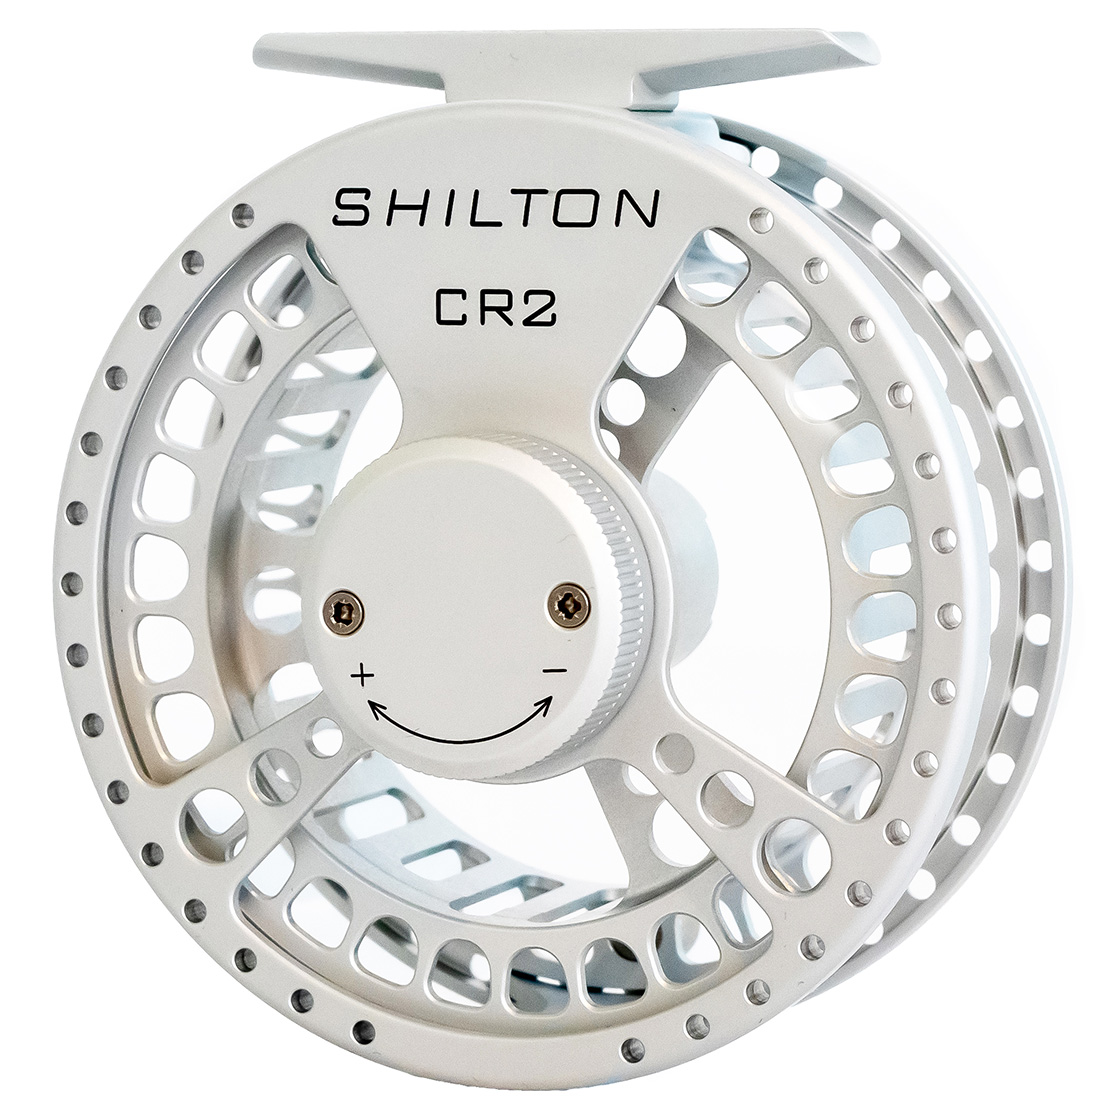 Shilton CR Series Fly Reel titanium, Reels, Fly Reels